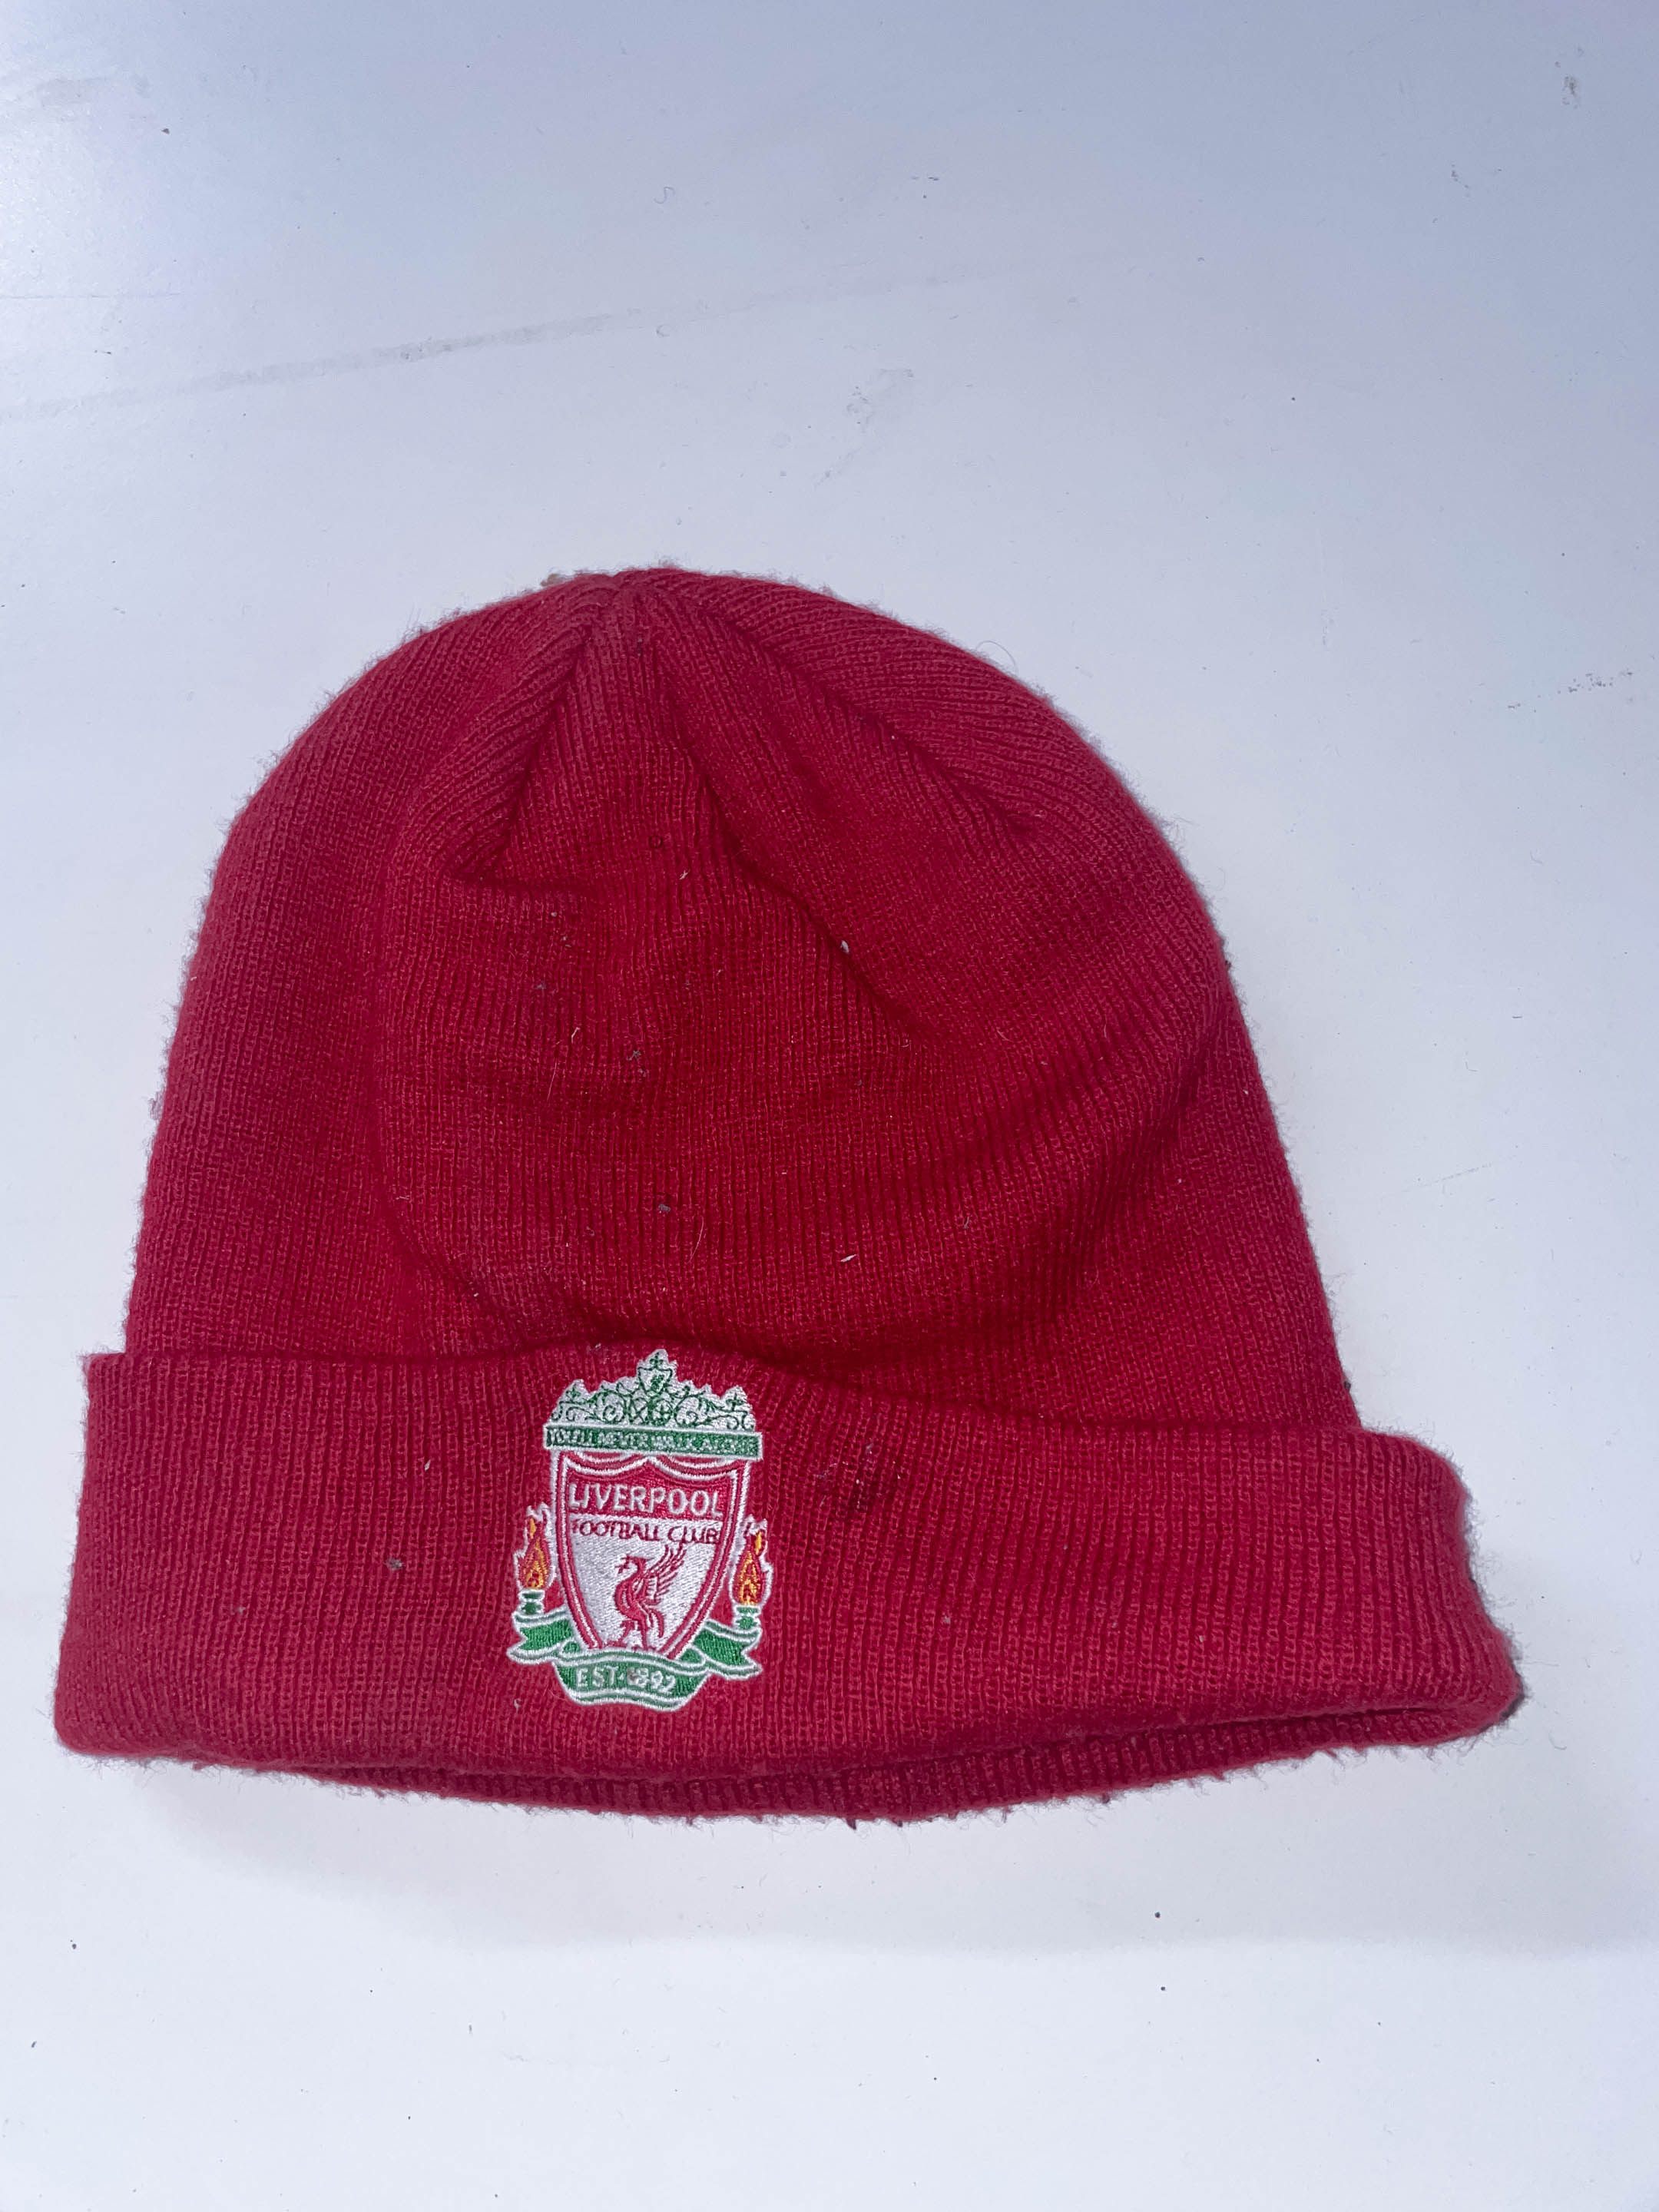 Vintage Red Liverpool FC winter beanie Hat